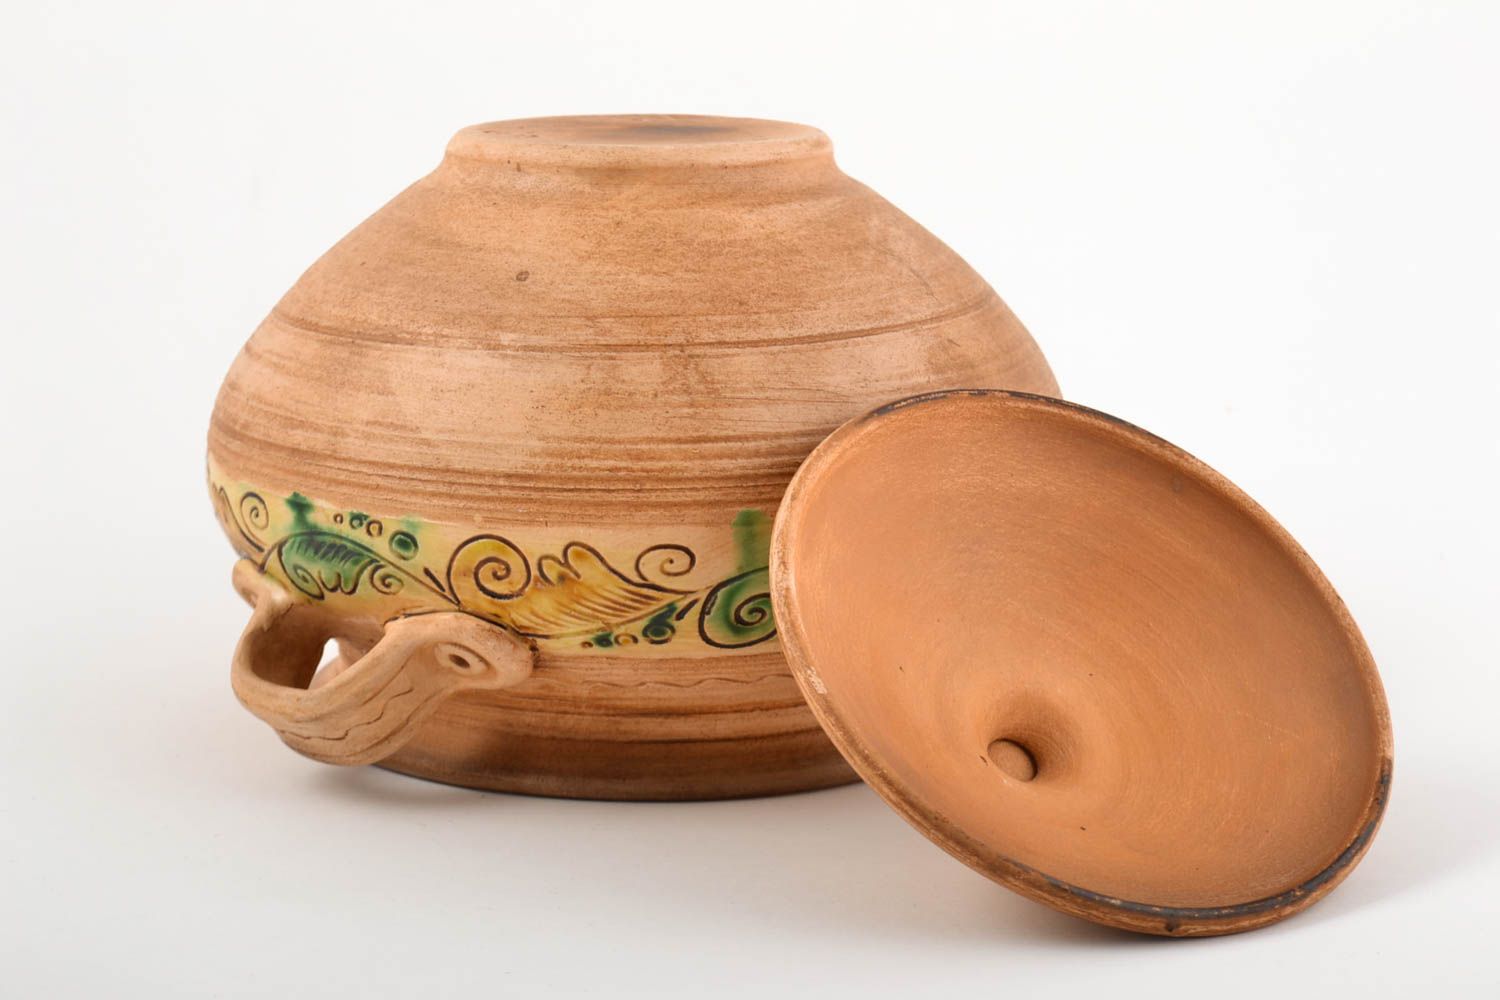 Keramik Geschirr handmade Ton Topf Küchen Geschirr Geschenk Idee bemalt schön foto 5